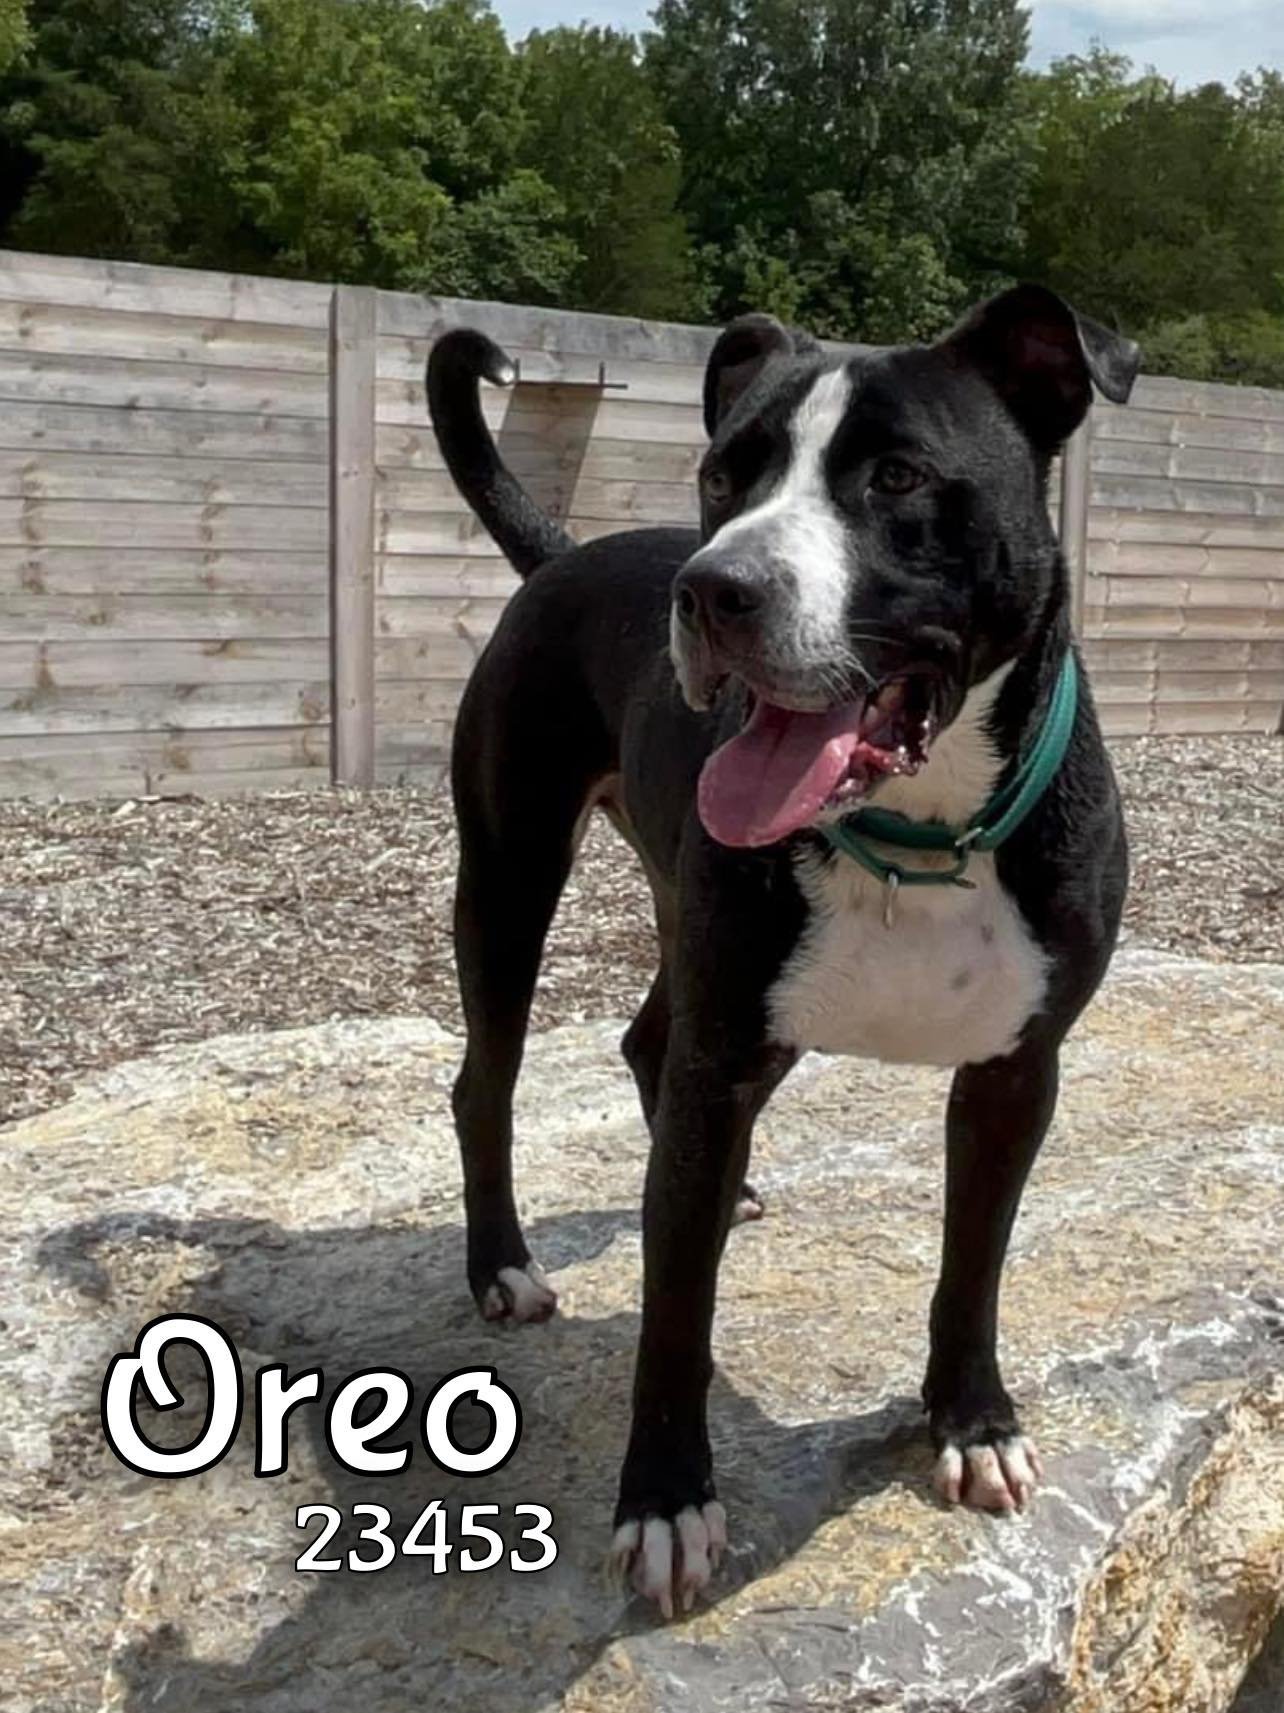 Oreo - $25 Adoption Fee Special, an adoptable Pit Bull Terrier in Oak Ridge, TN, 37830 | Photo Image 1